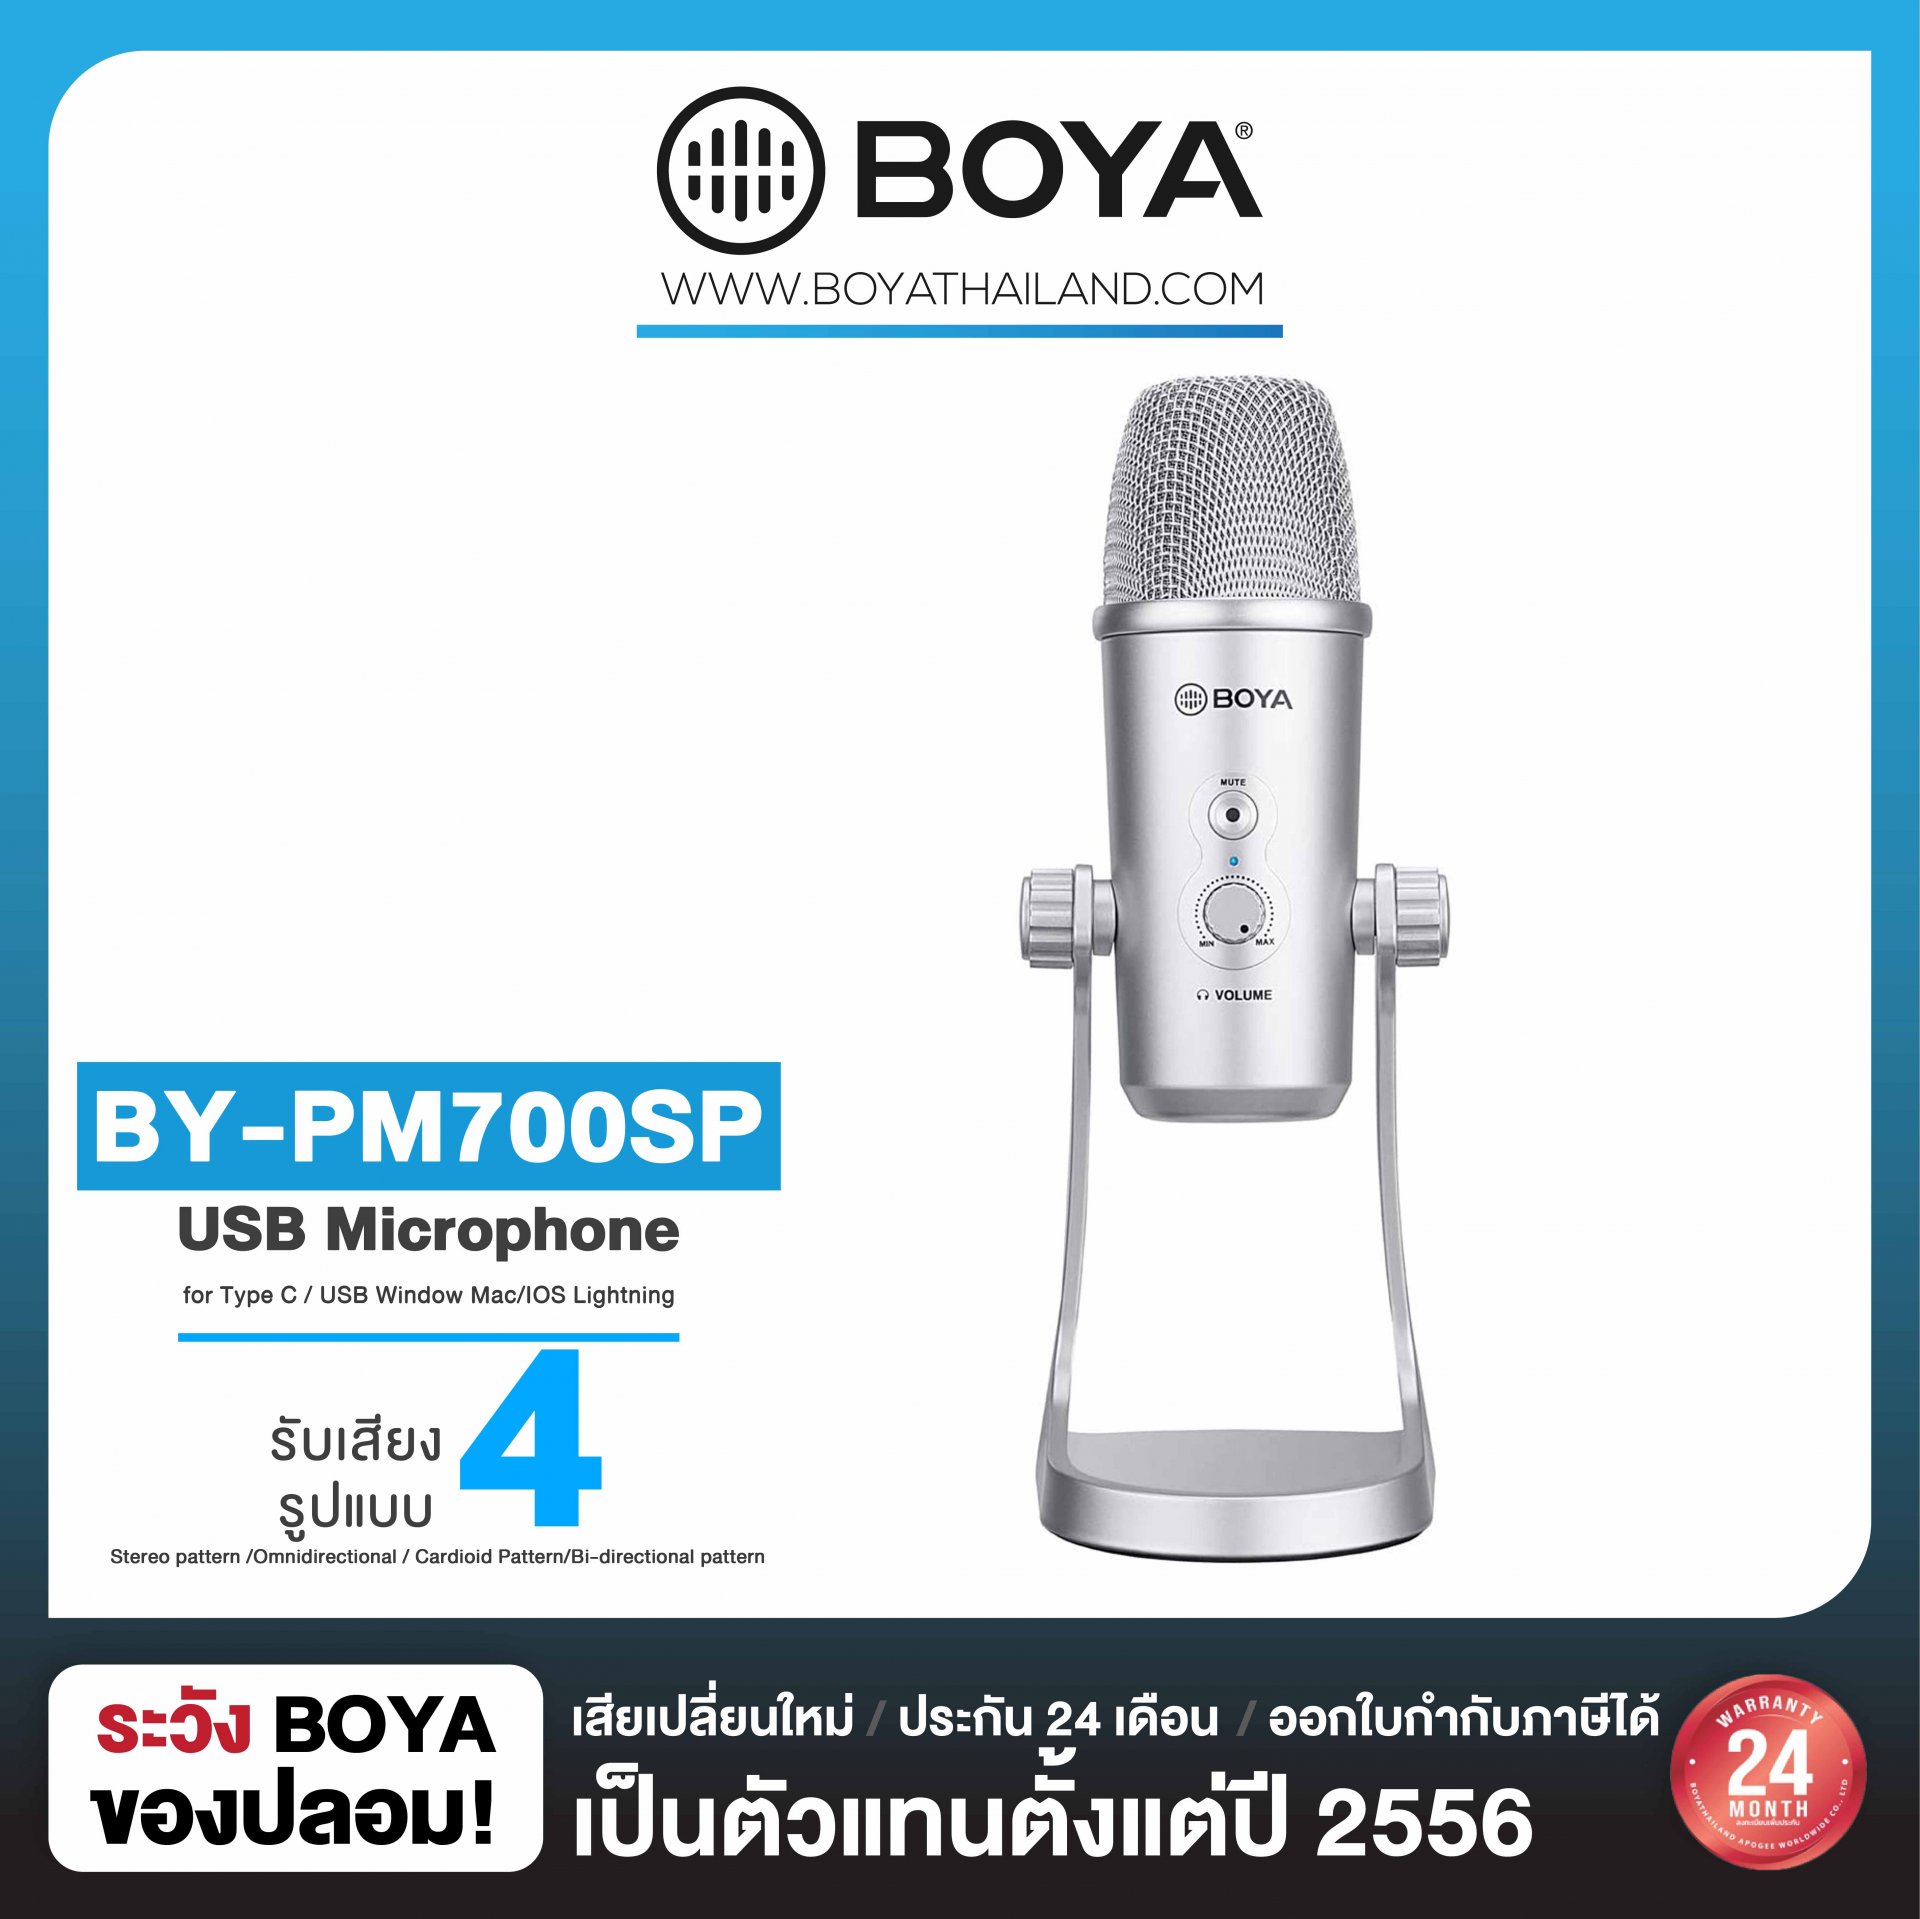 BOYA BY-PM700SP USB Microphone